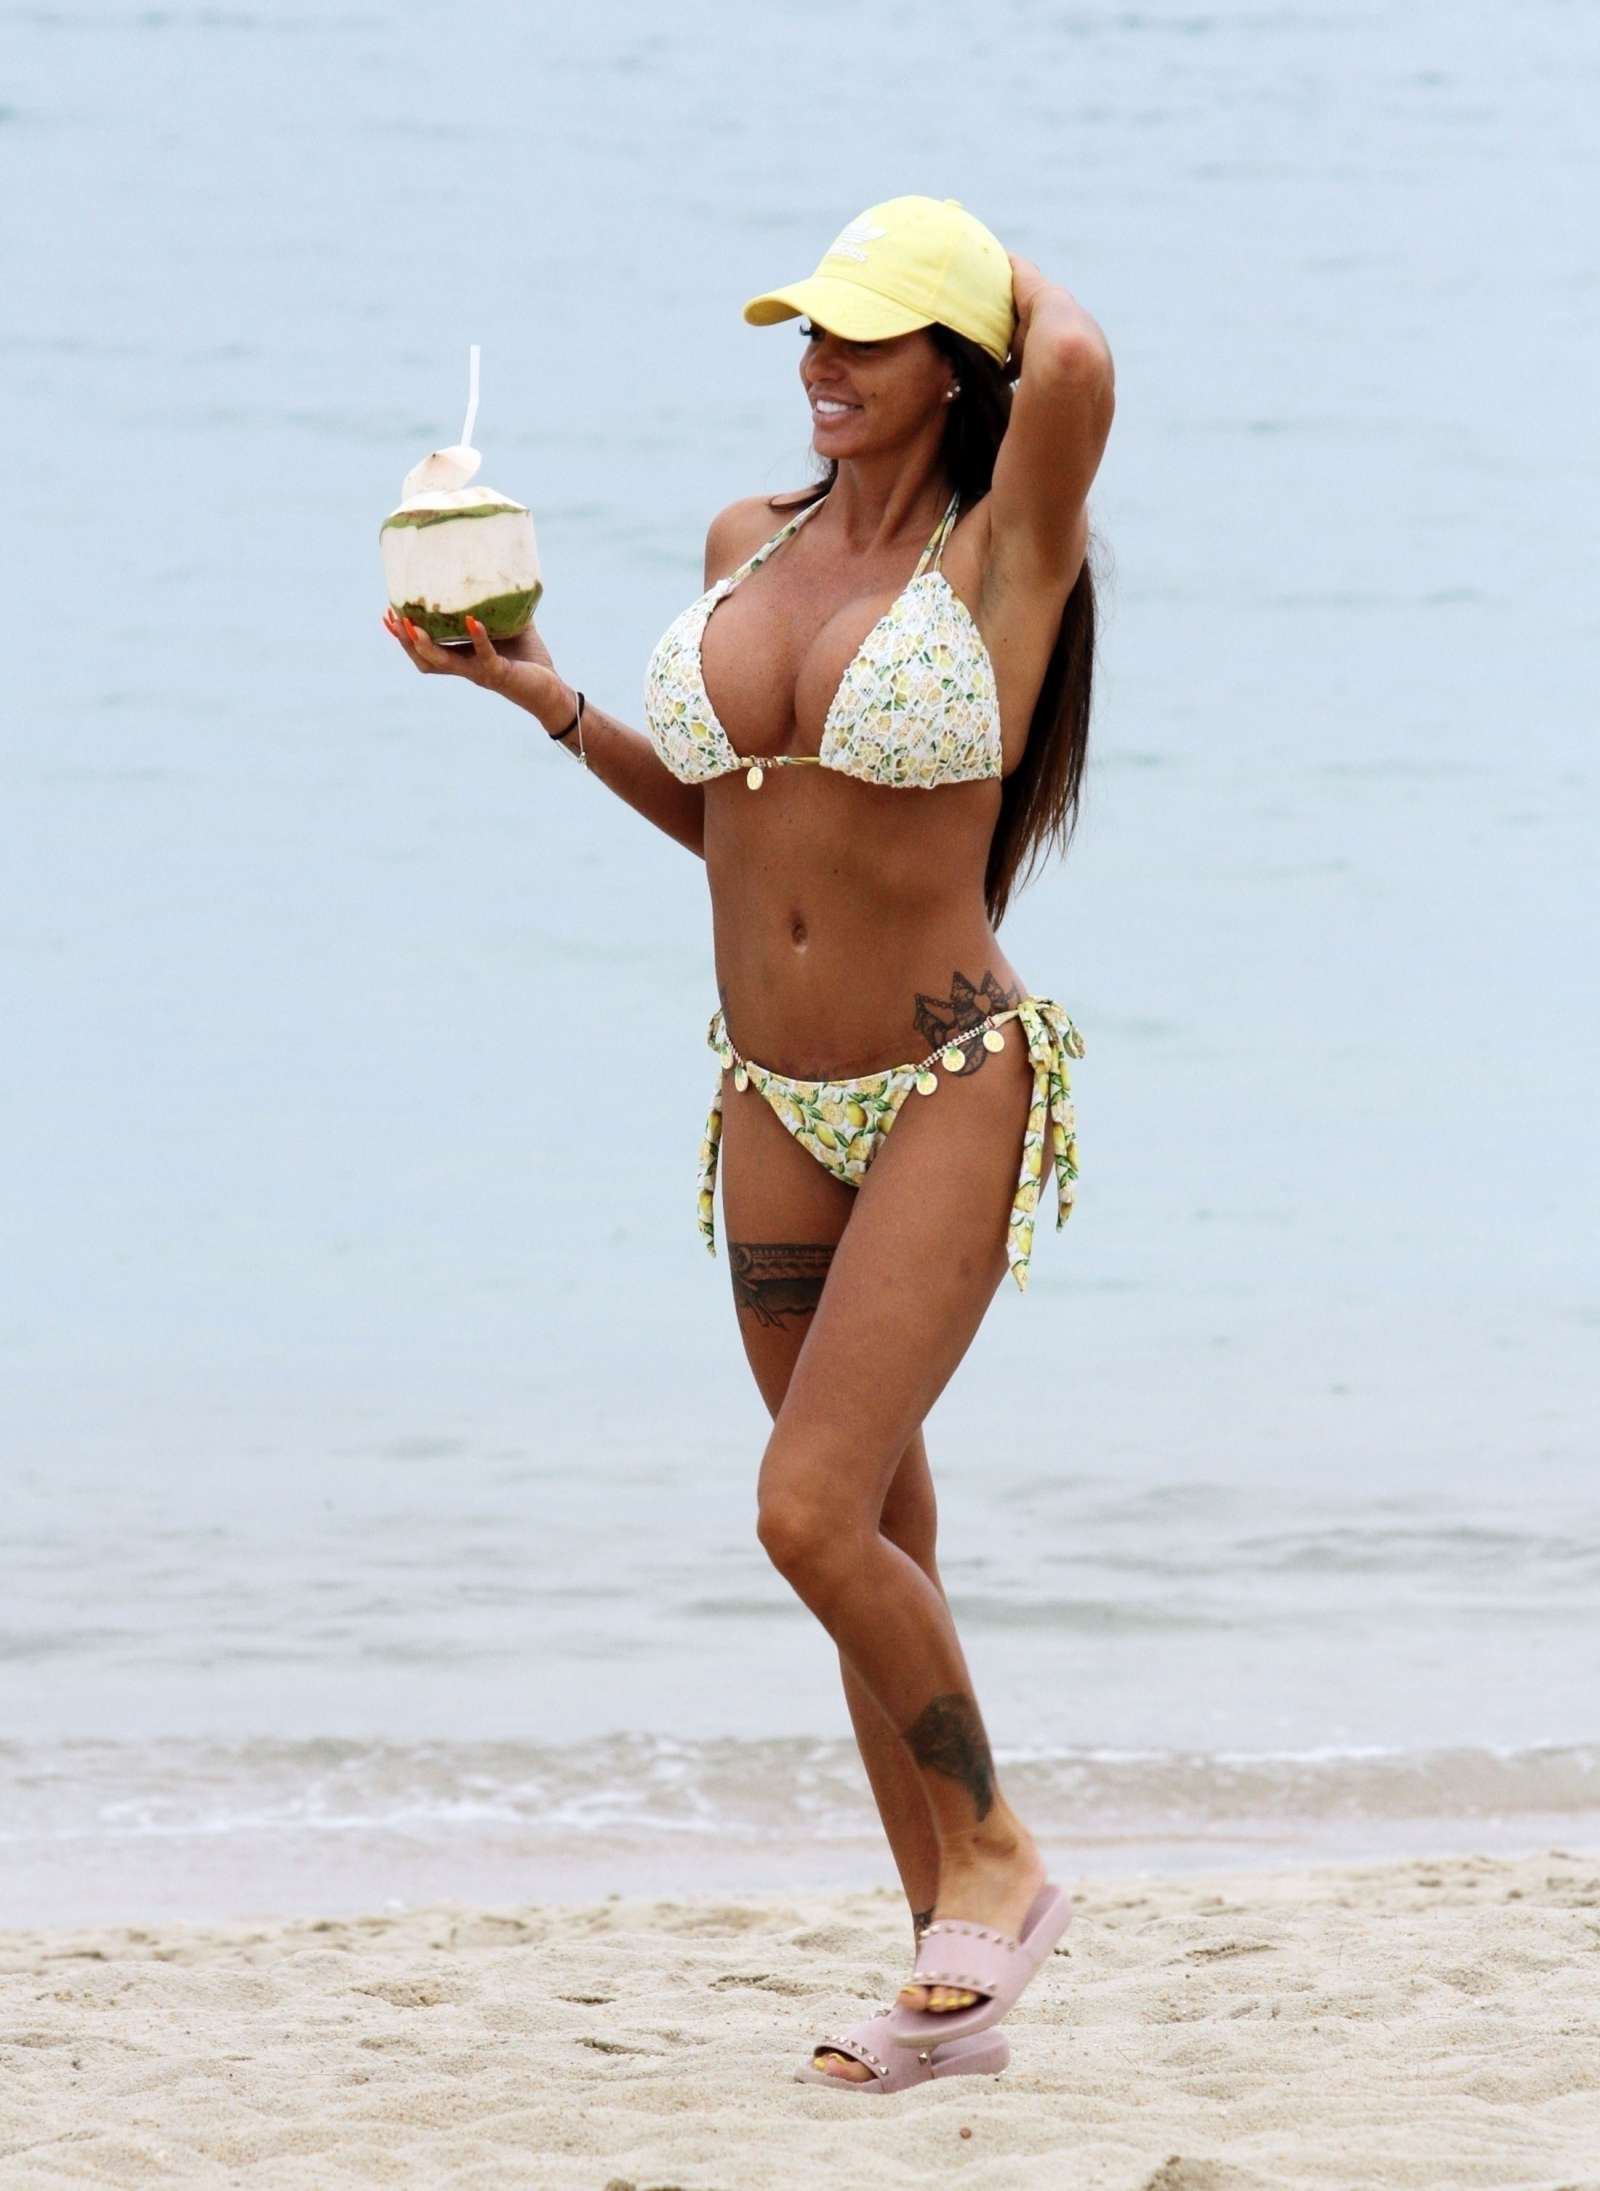 Katie Price in Bikini on the beach in Thailand